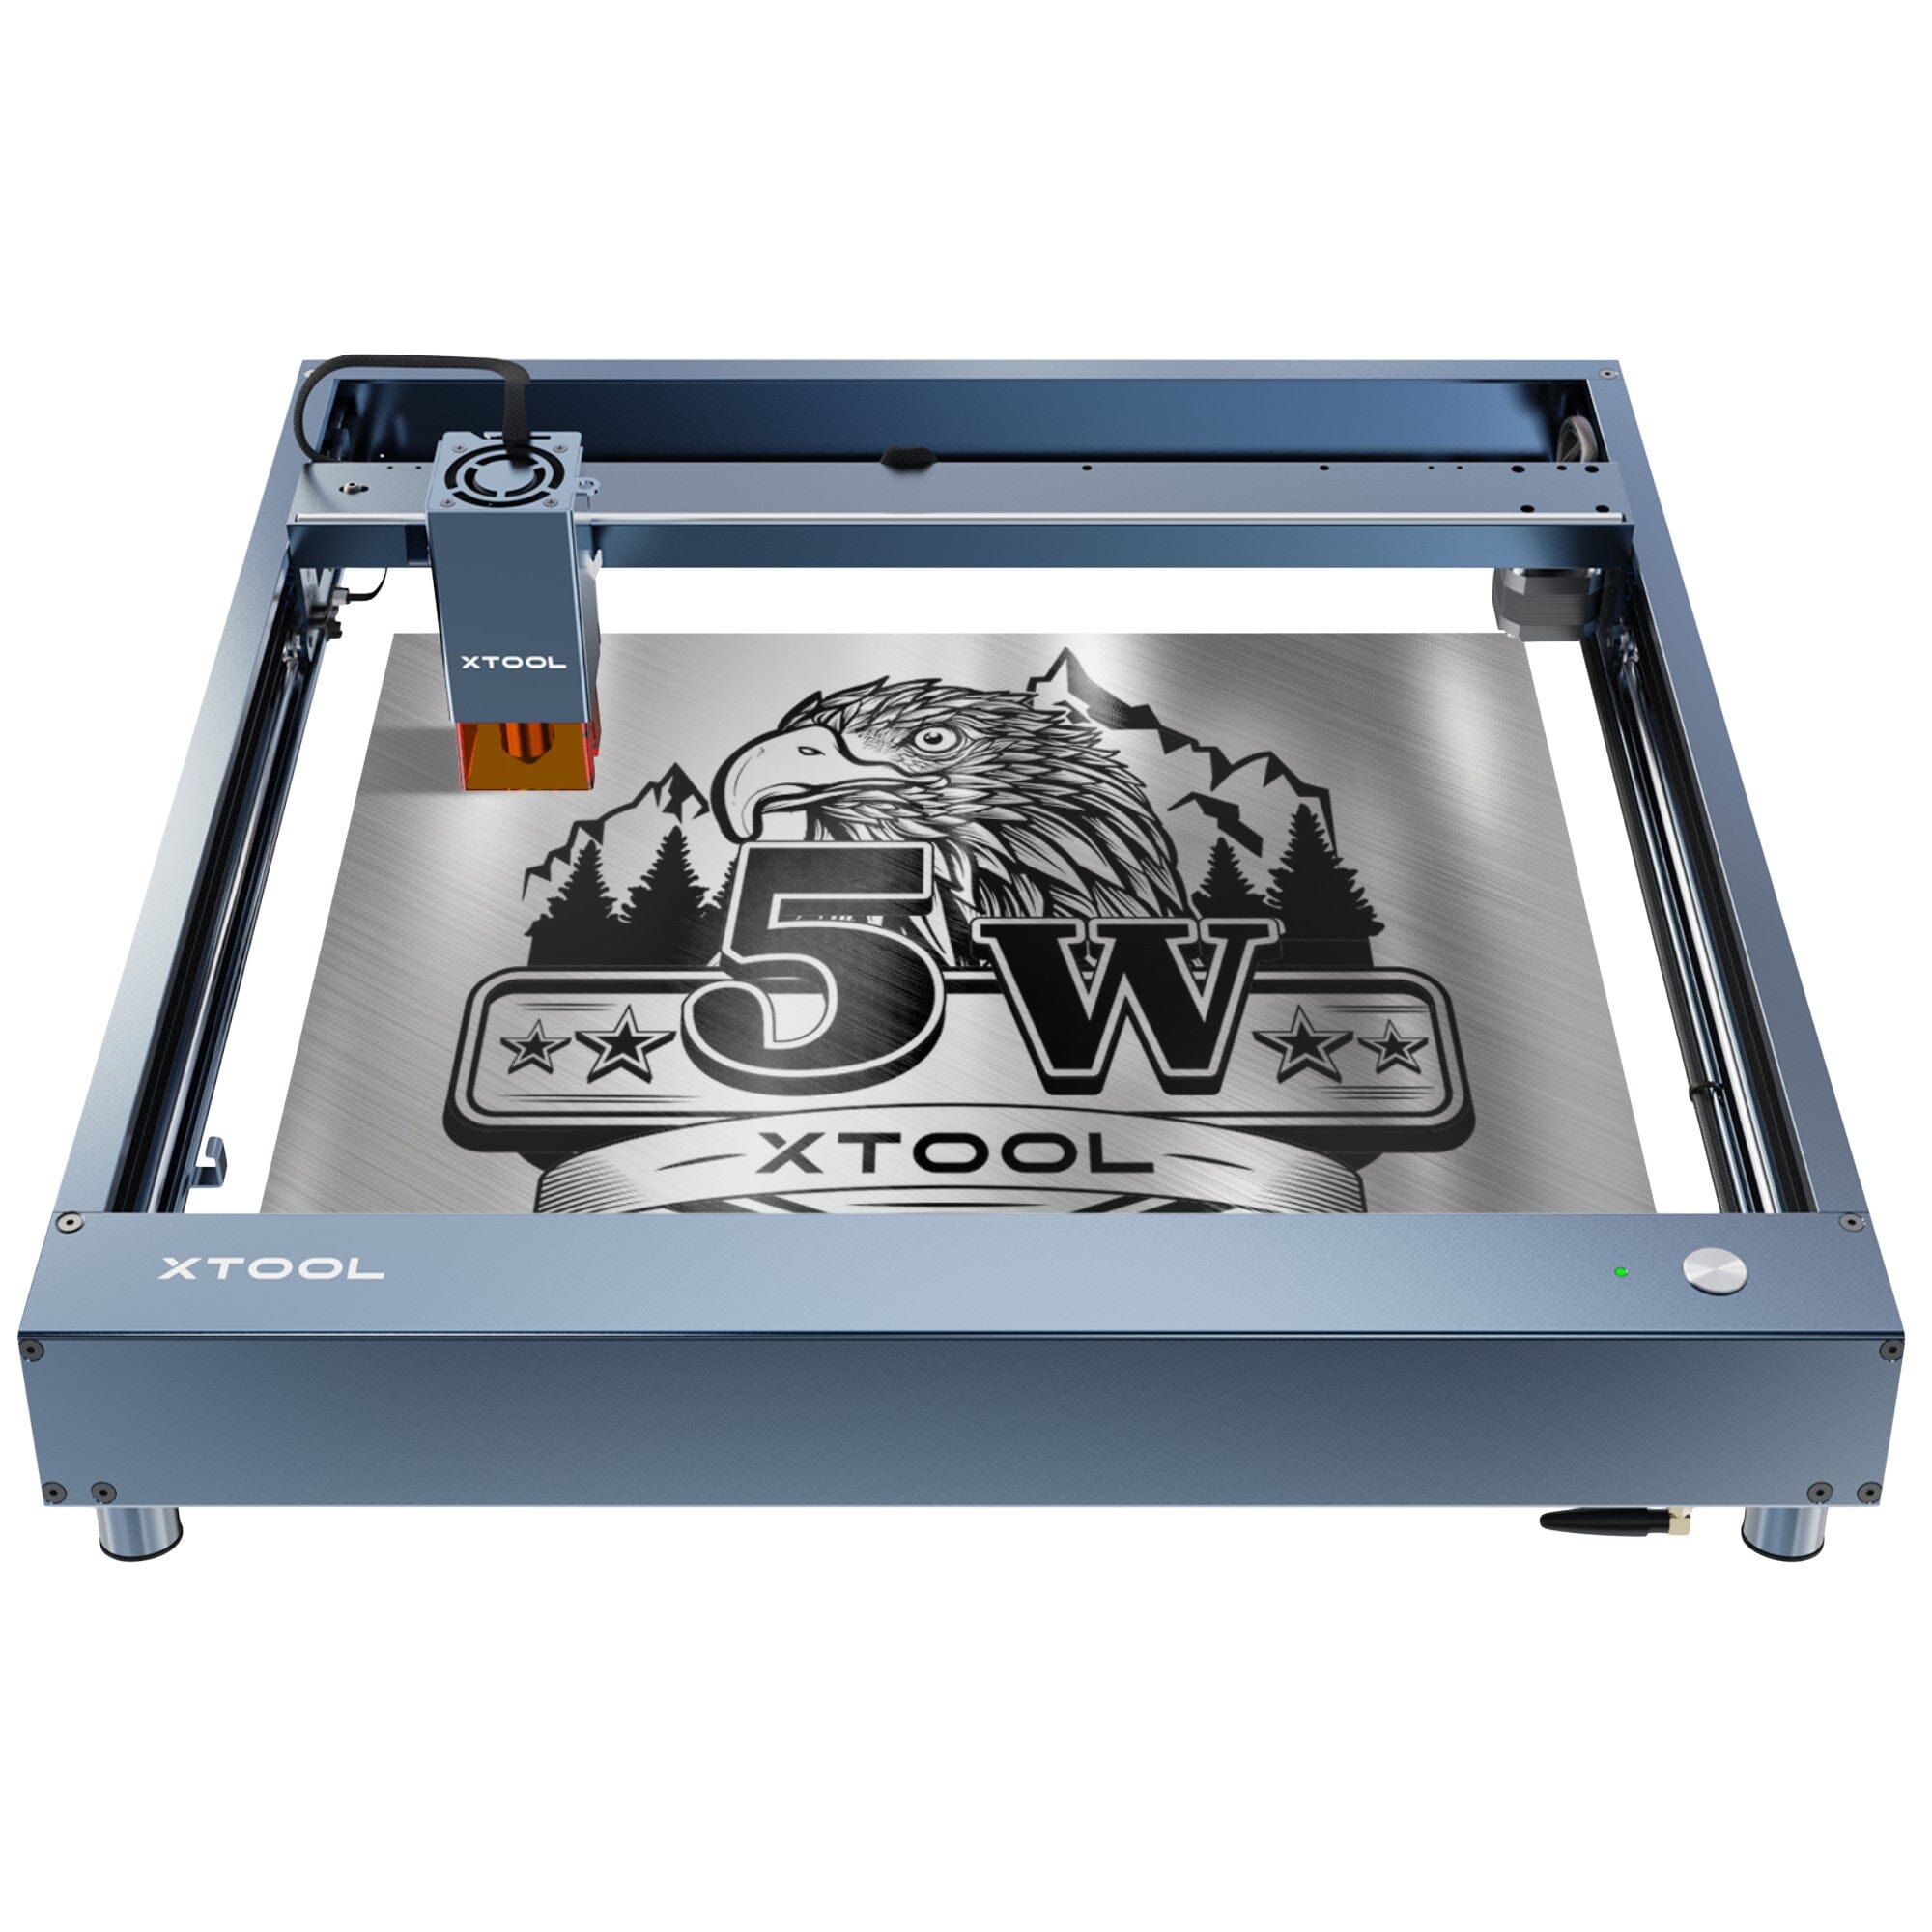 xTool D1 2.0 PRO Desktop Laser Engraver